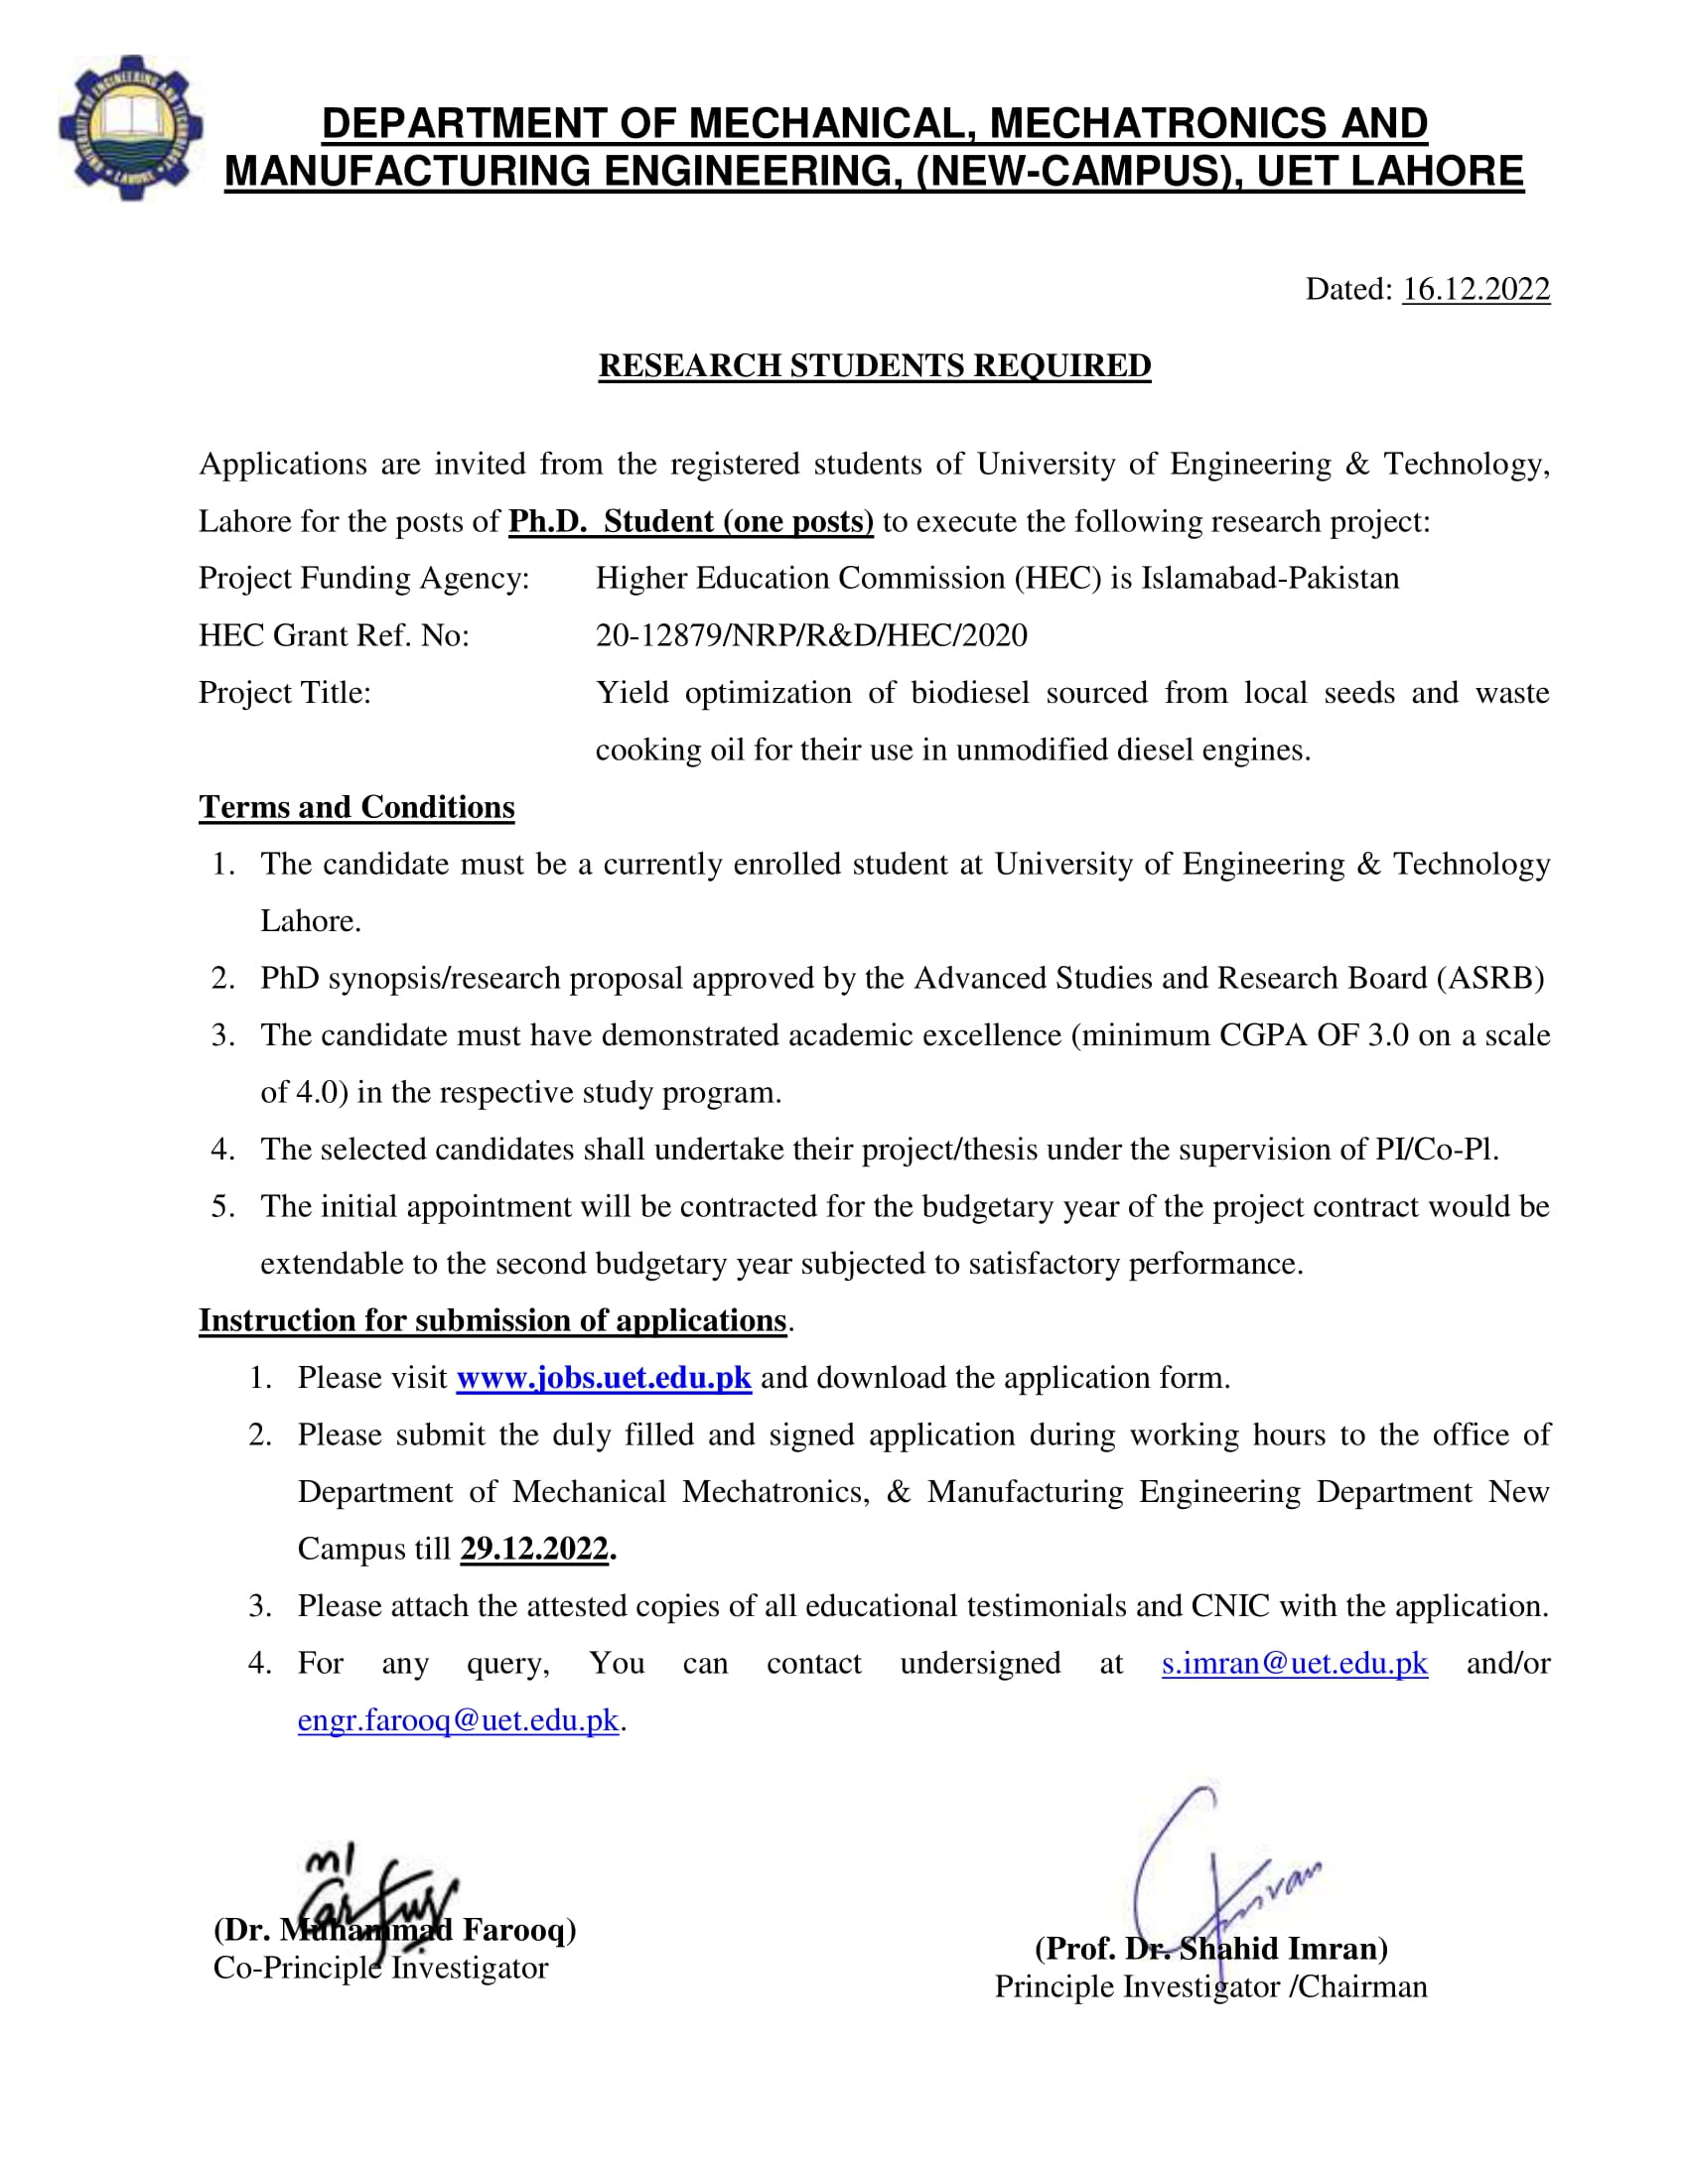 Advertisement_PhD_Student_Required_NRPU-1